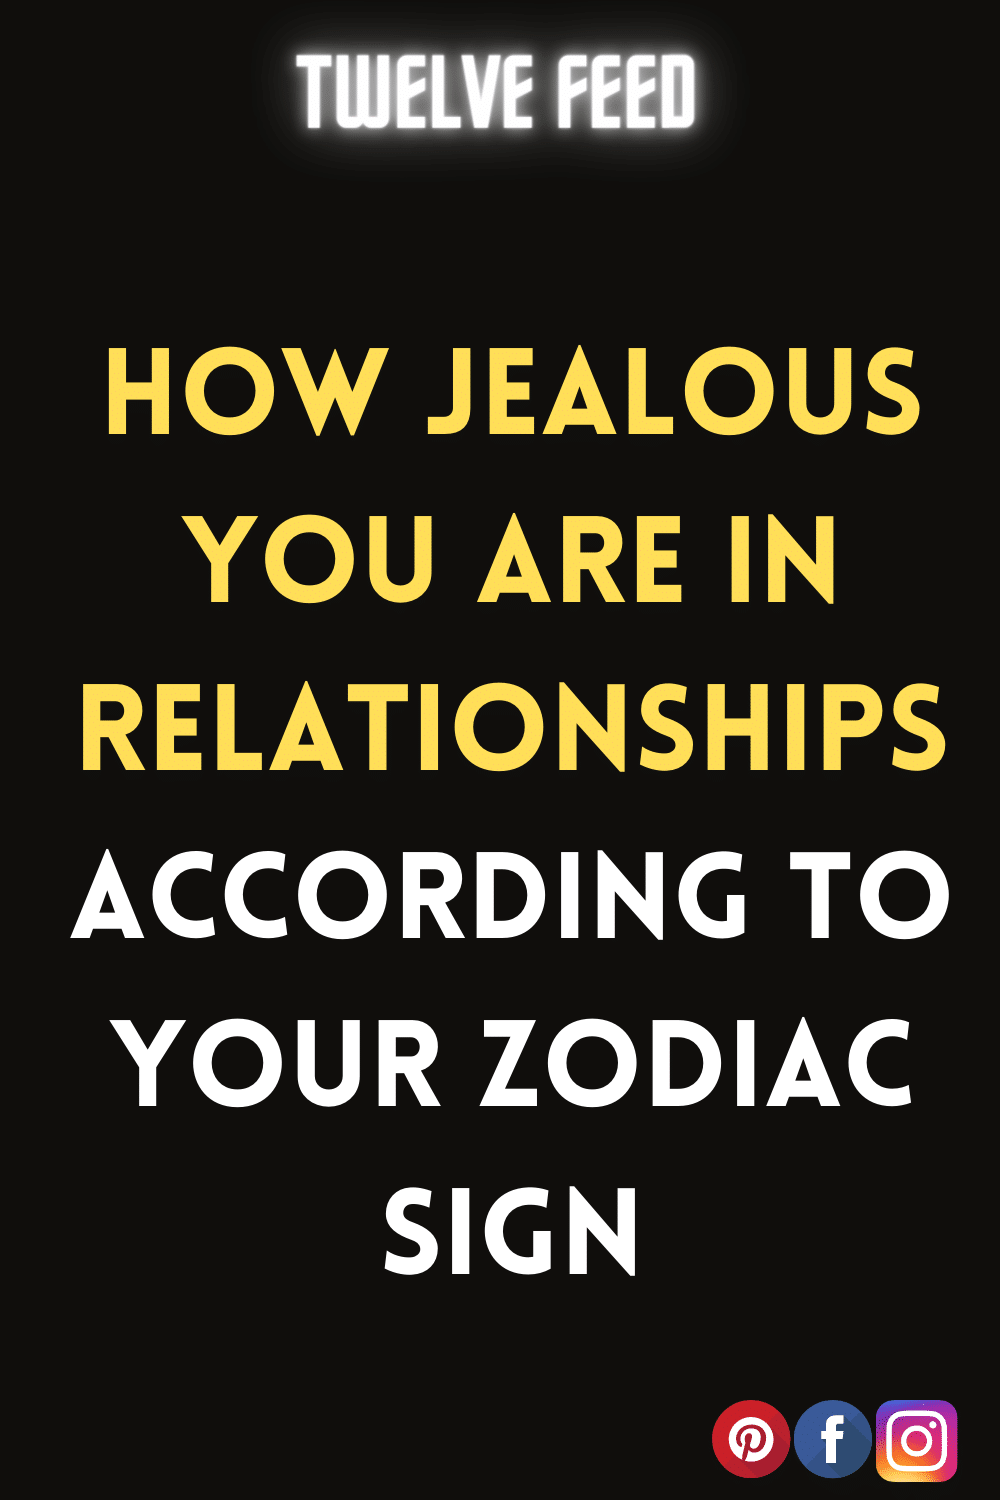  #ZodiacSigns #Astrology #horoscopes #zodiaco #relationshipgoals #love #horoscope #horoscopescompatibility #horoscopesigns #horoscopelovematch #horoscopelove #horoscopes #astrology #astrologyonline #astrologyfacts #astrologytoday #astrologymemes #AriesQoutes #CancerQoutes #LibraQoutes #TaurusQoutes #LeoQoutes #ScorpioQoutes #AquariusQoutes #GeminQoutesi #VirgoQoutes #SagittariusQoutes #PiscesQoutes #capricornQoutes #tarotcards #zodiacmemes #magic #spirituality #astrologymemes